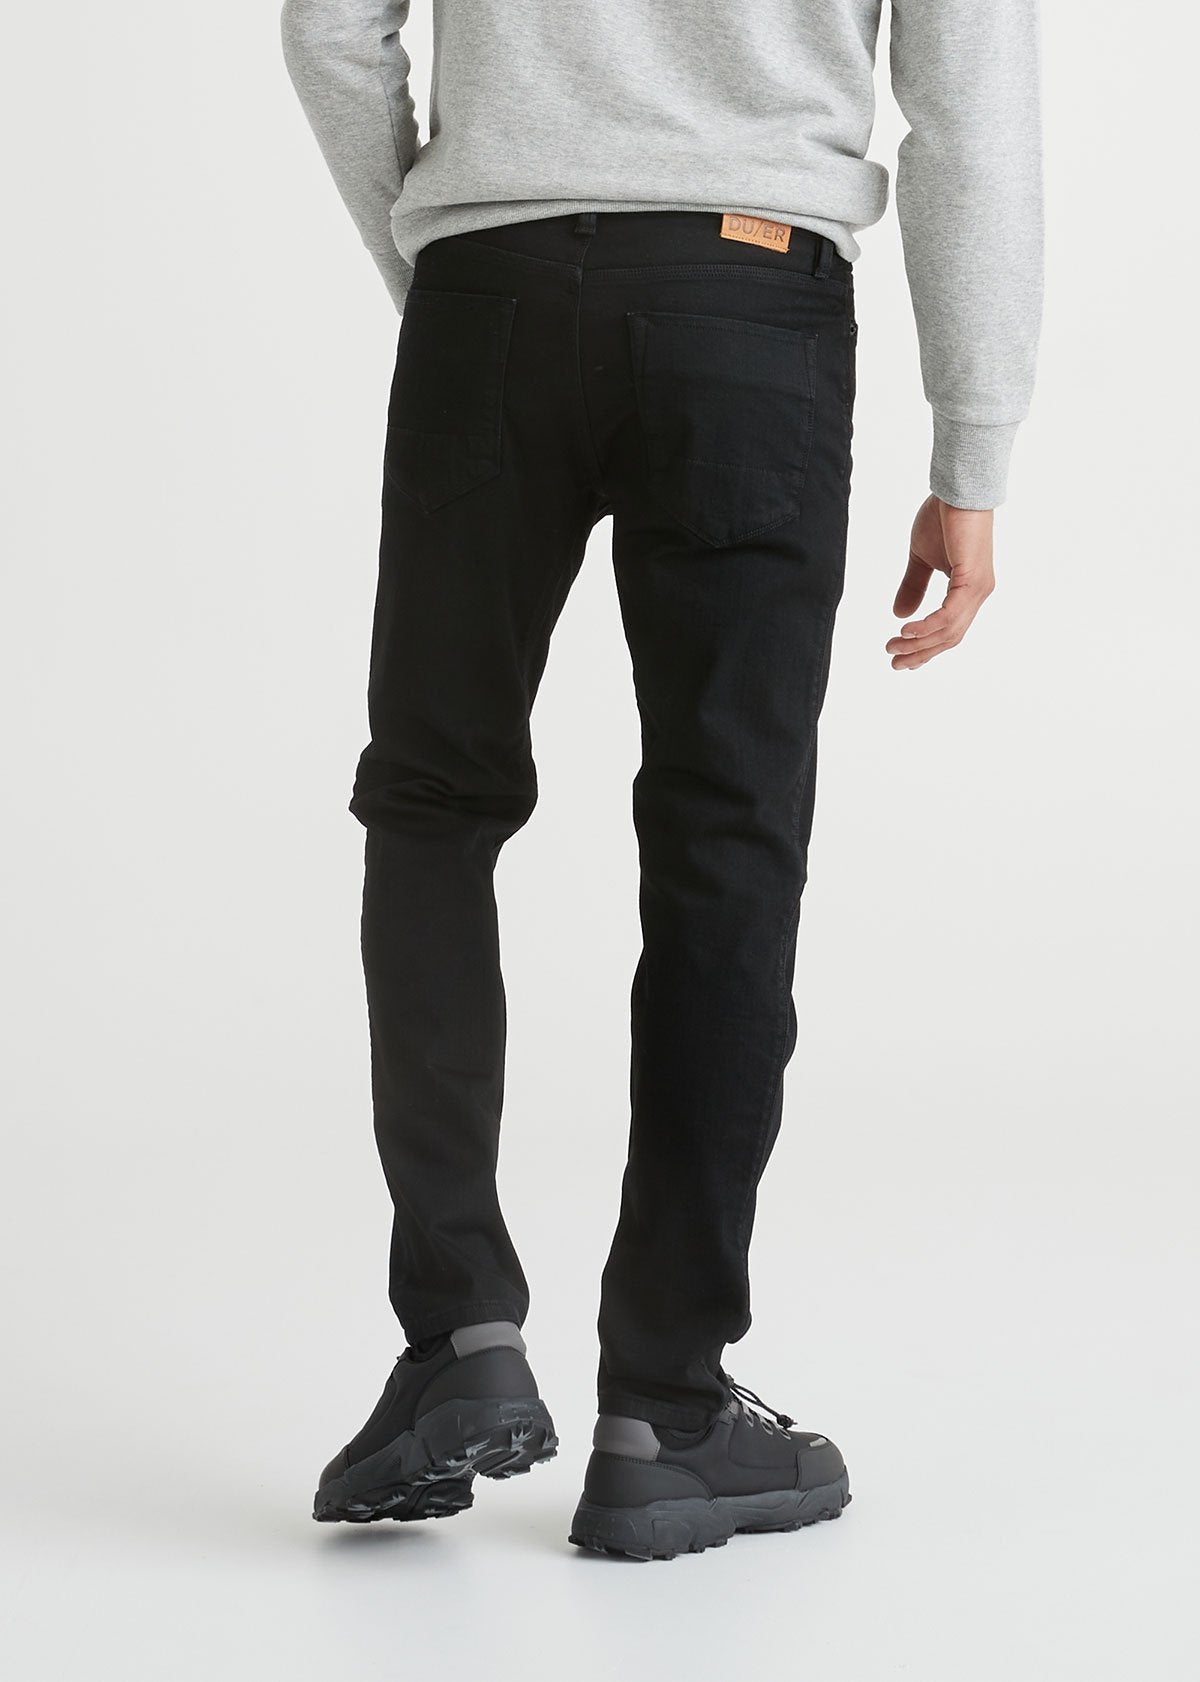 36 Wholesale Men's 5-Pocket UltrA-Stretch Skinny Fit Chino Pants